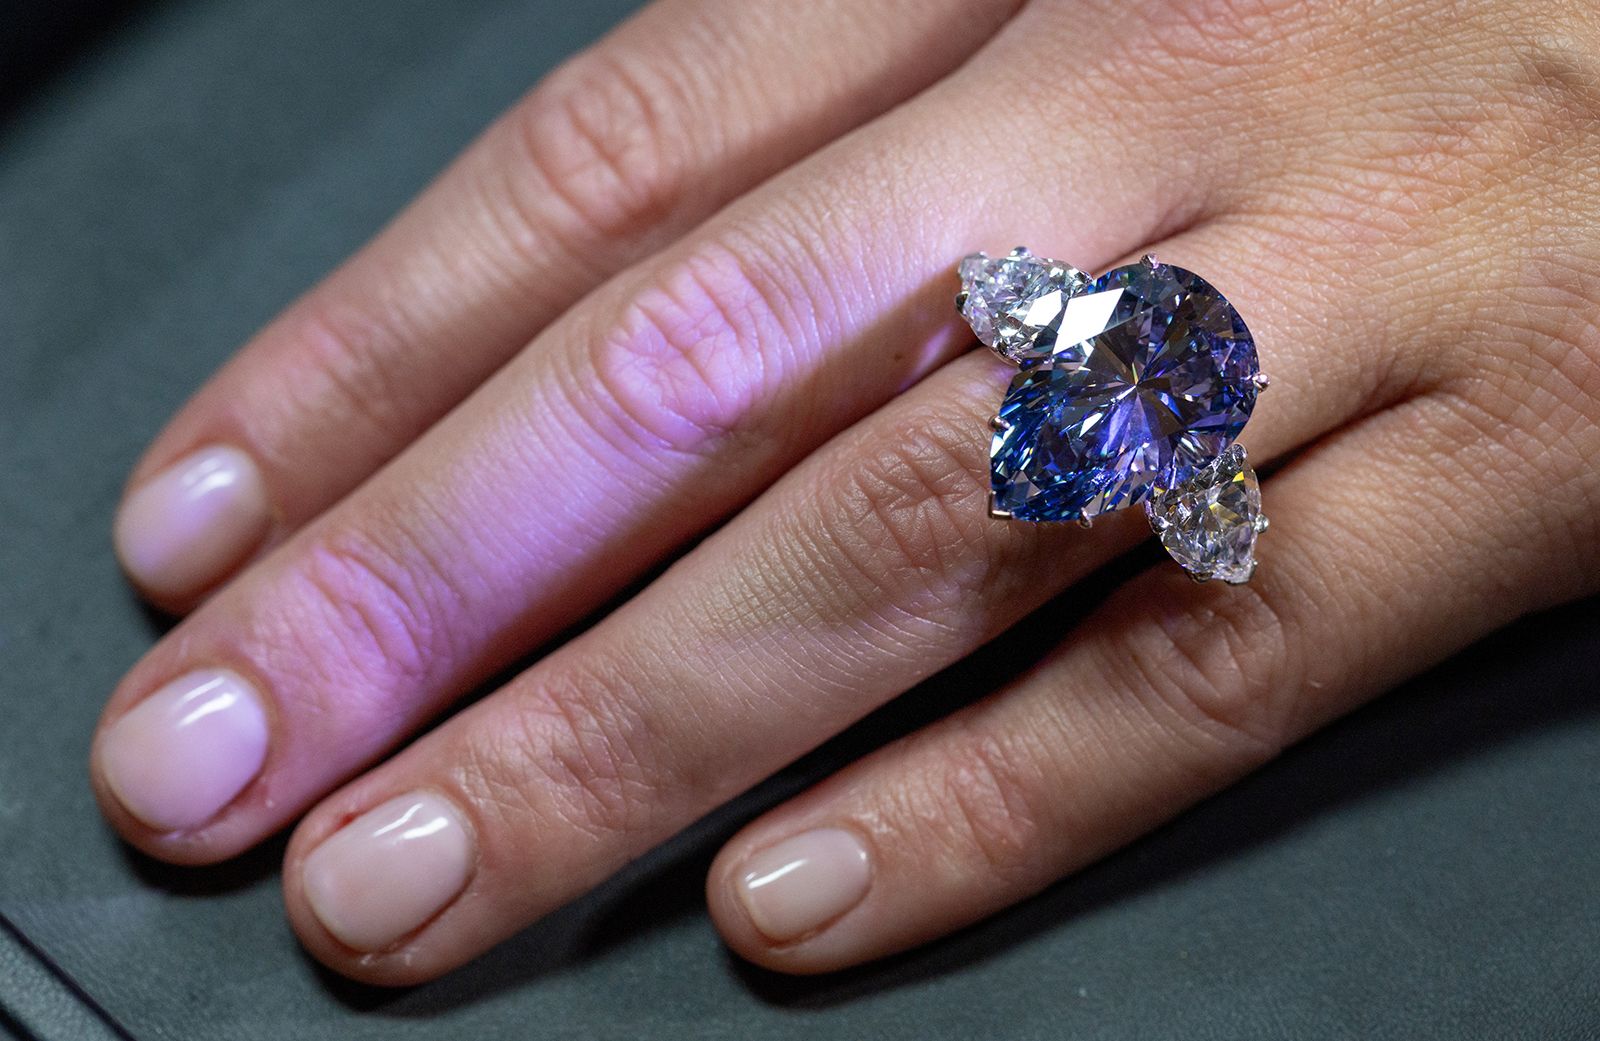 Bleu Royal' diamond fetches almost $44 million at Christie's auction in  Geneva